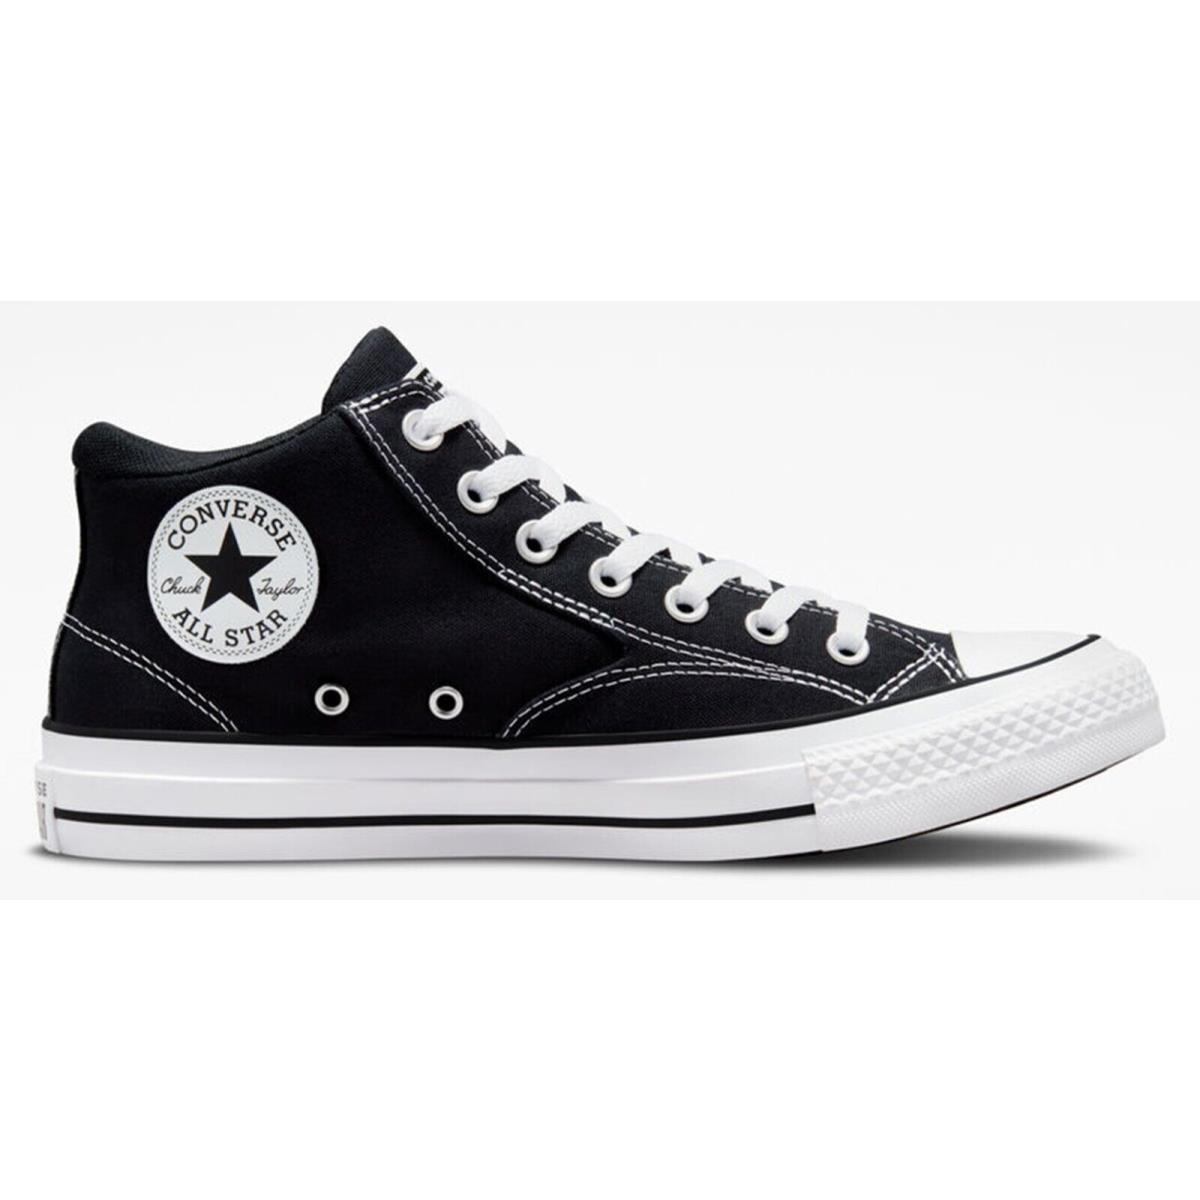 Converse Men`s Chuck Taylor All Star Malden Street Mid-top Shoes Wide Width Black/White/Black